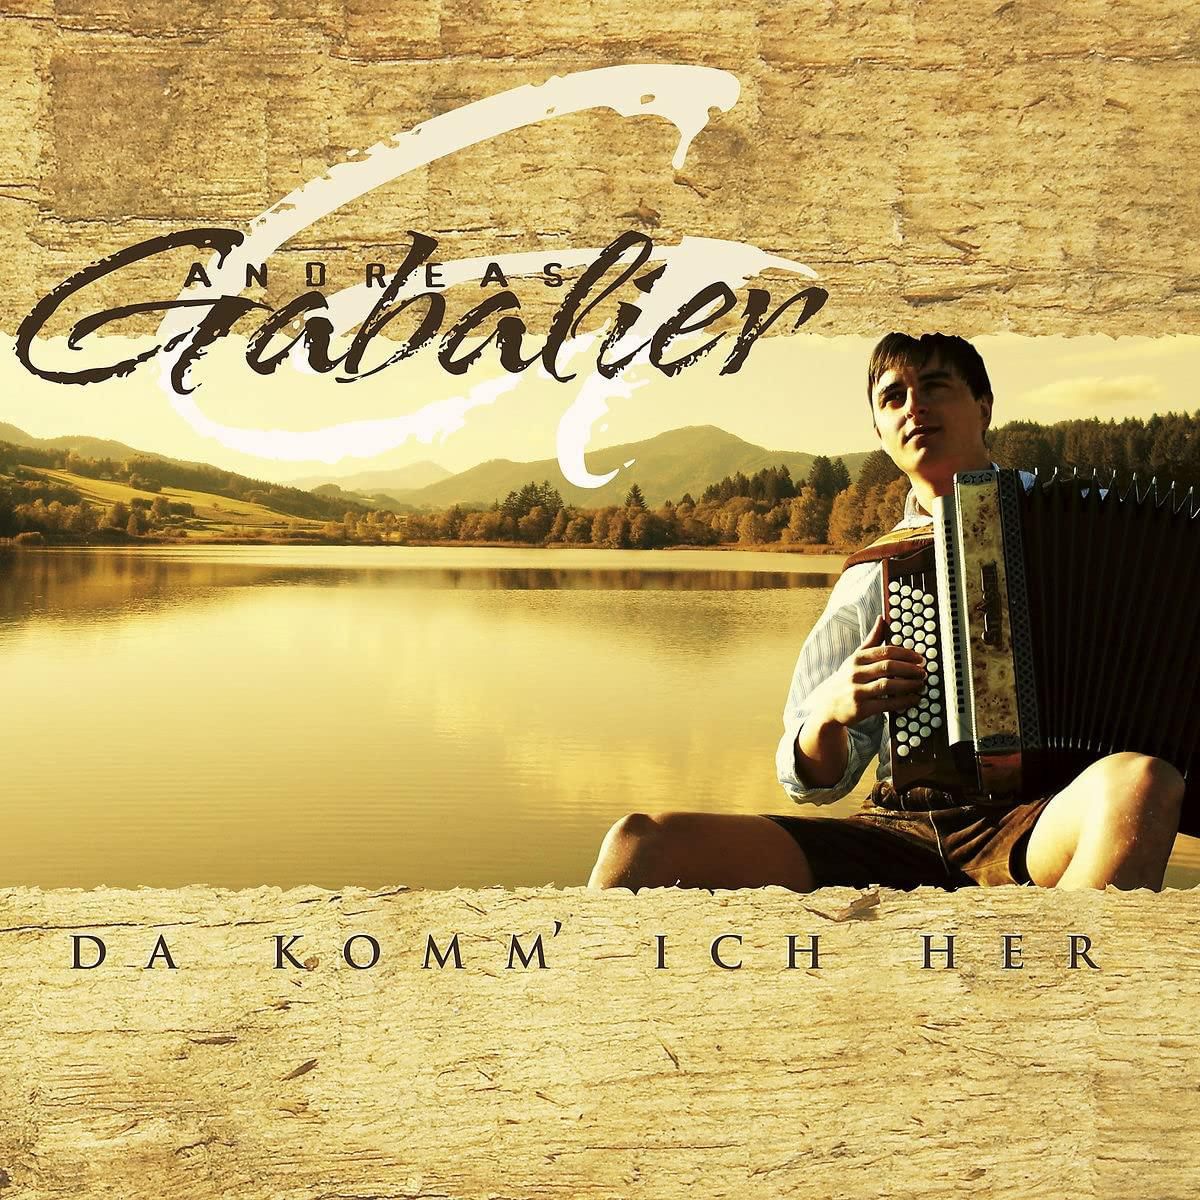 Andreas Gabalier - Da komm\' (Vinyl) - ich her